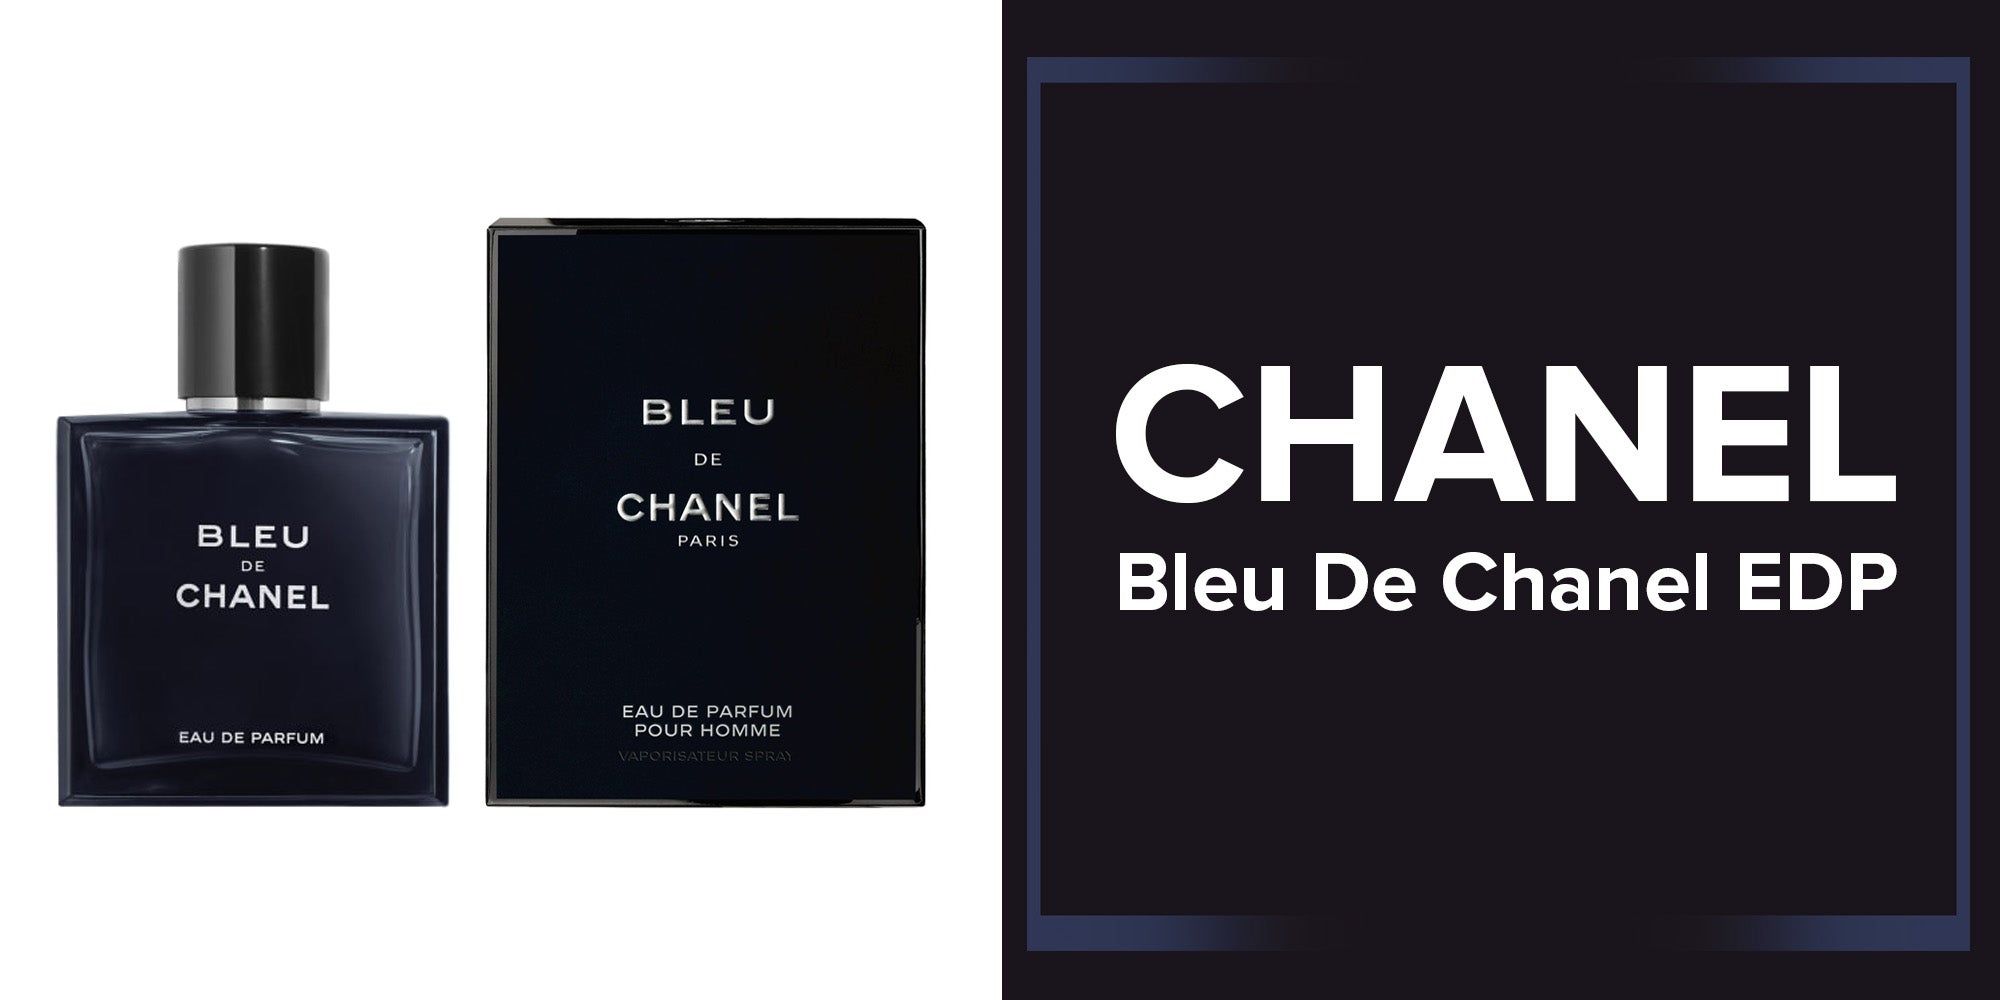 CHANEL Bleu De Chanel Parfum 50ml KSA